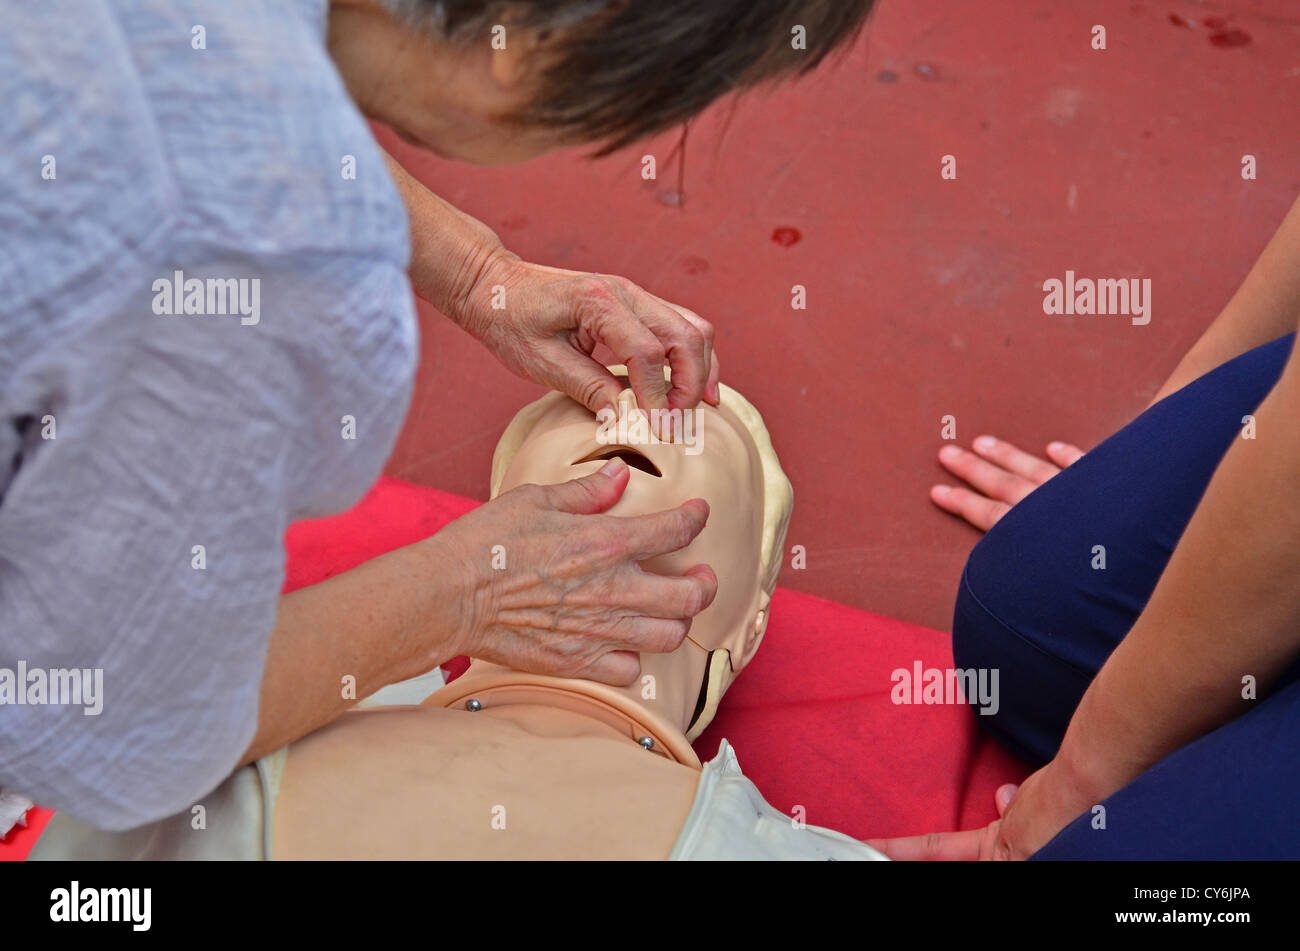 perform CPR resuscitation Stock Photo